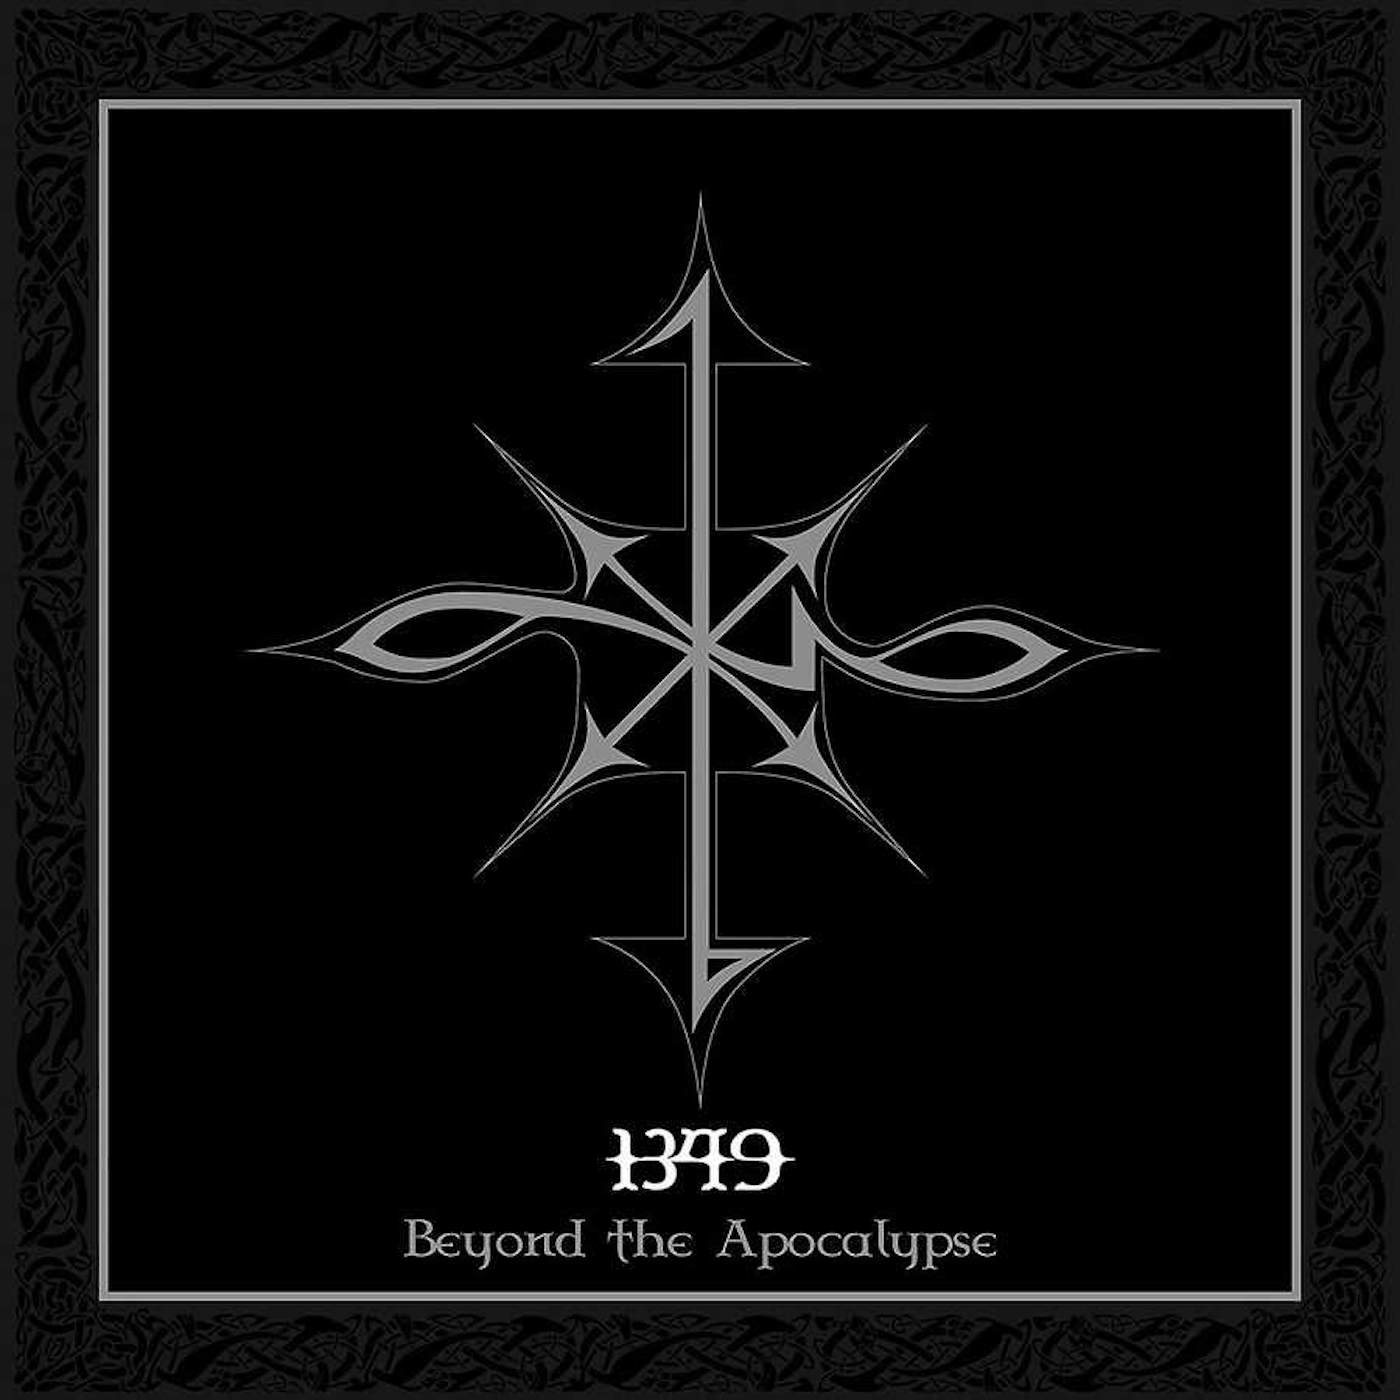 1349 BEYOND THE APOCALYPSE (2 LP/CLEAR VINYL) Vinyl Record